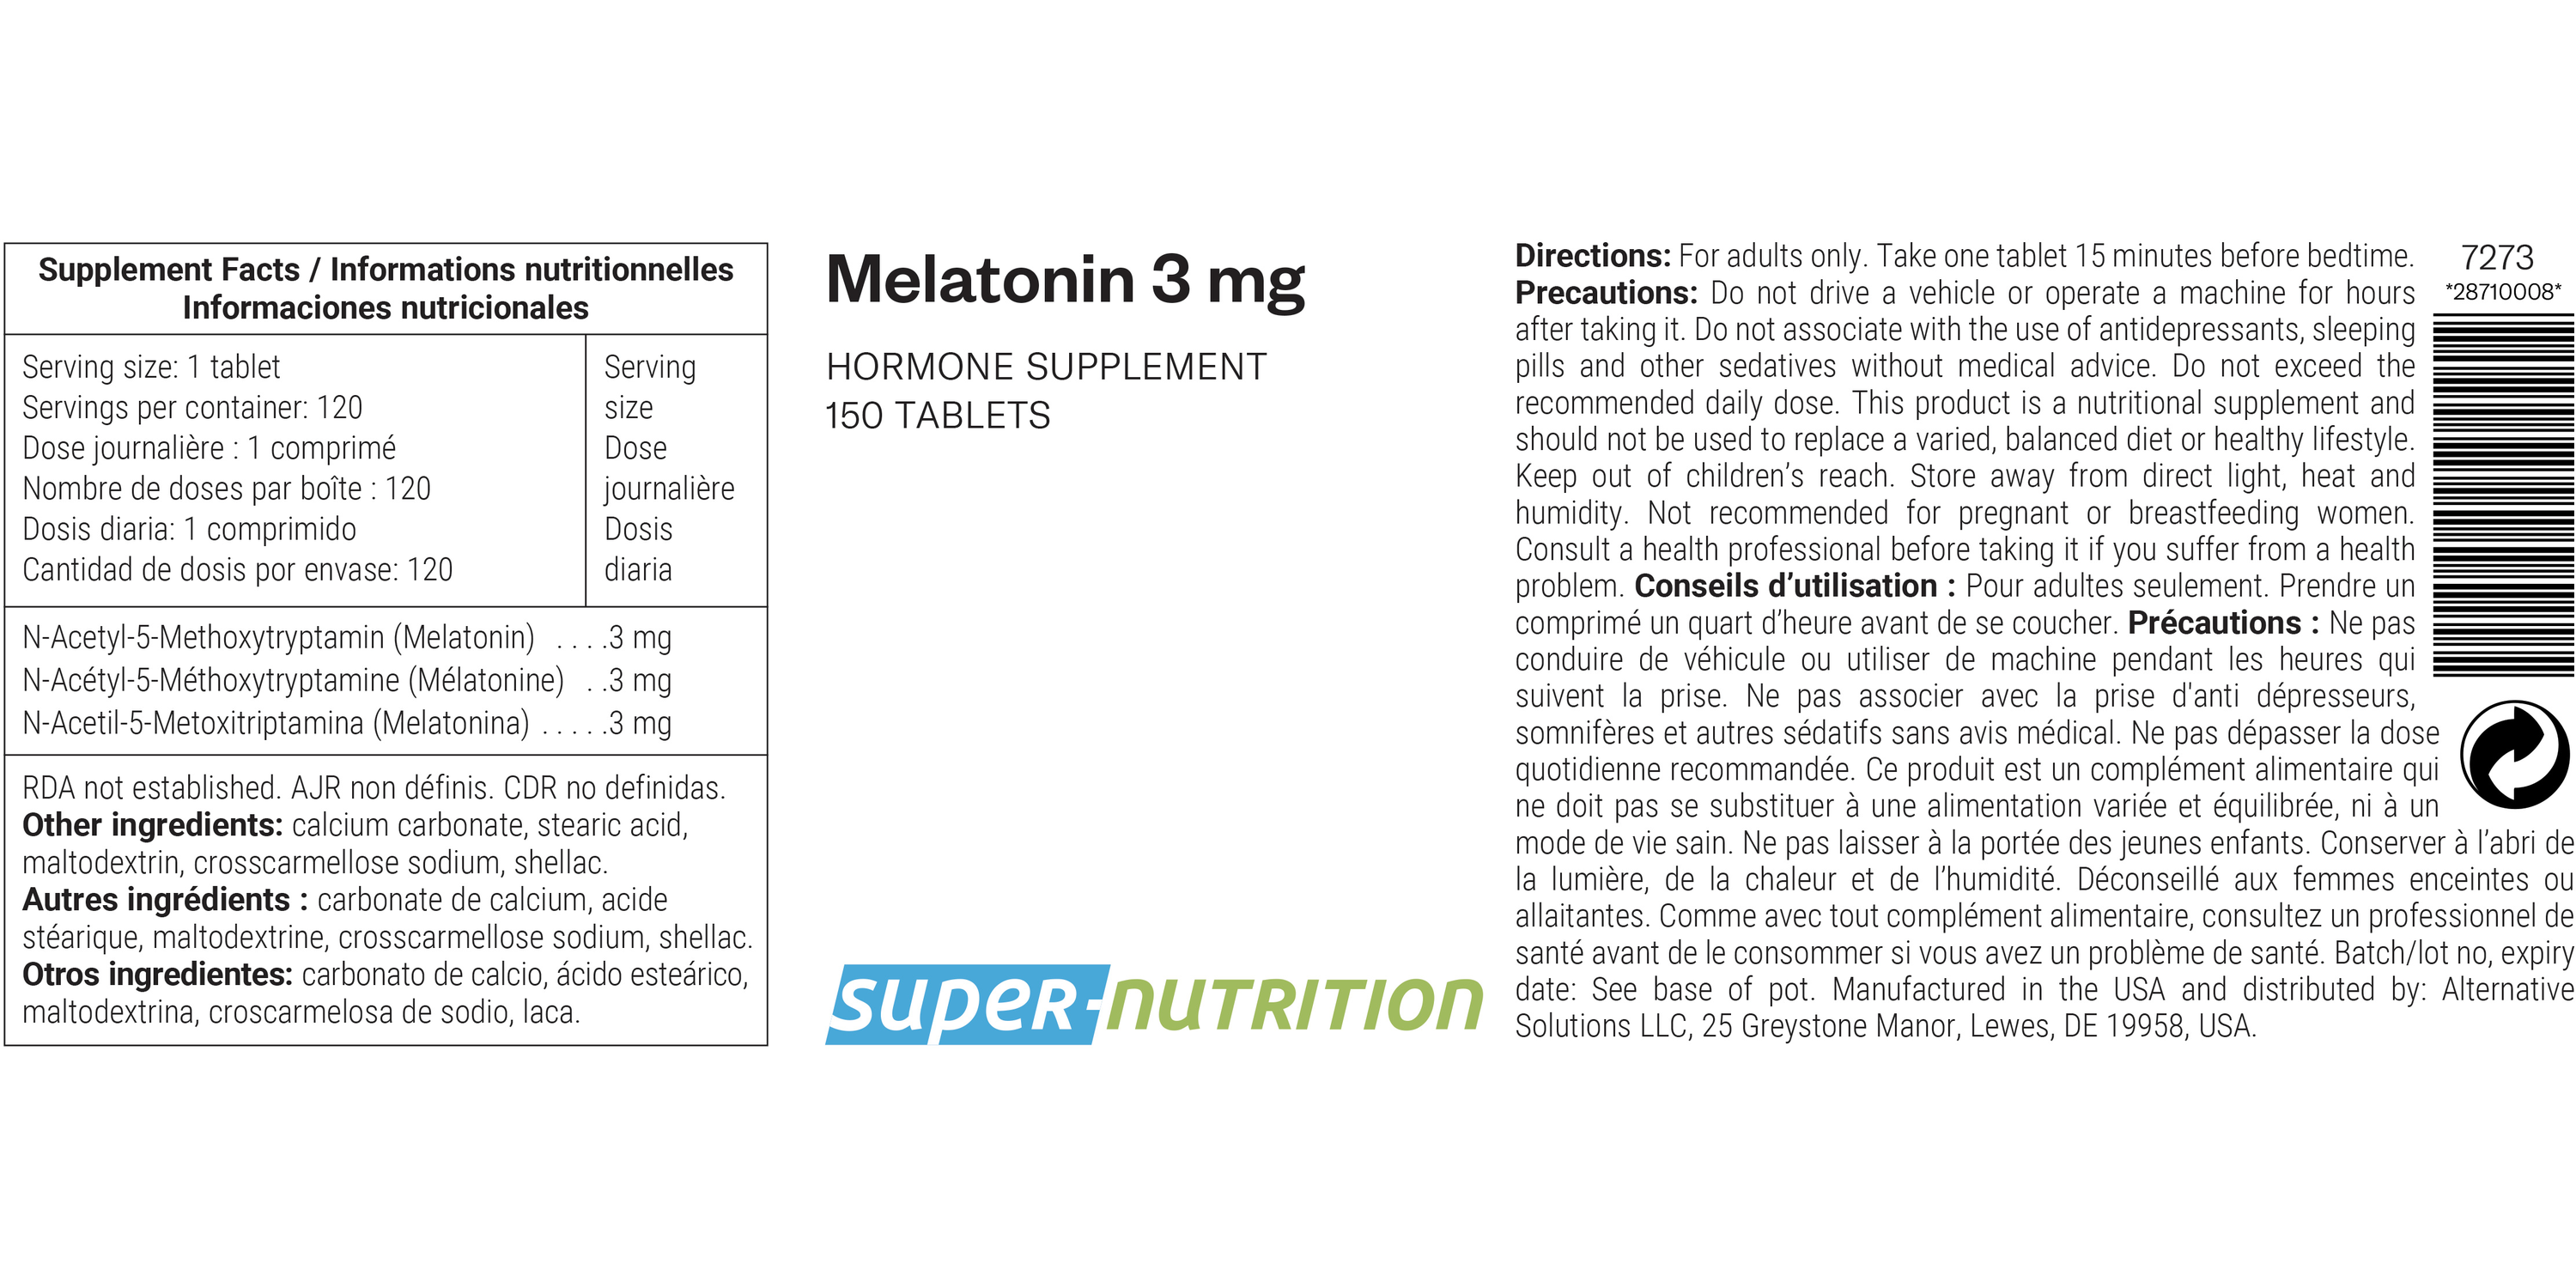 Melatonin 3 mg 150